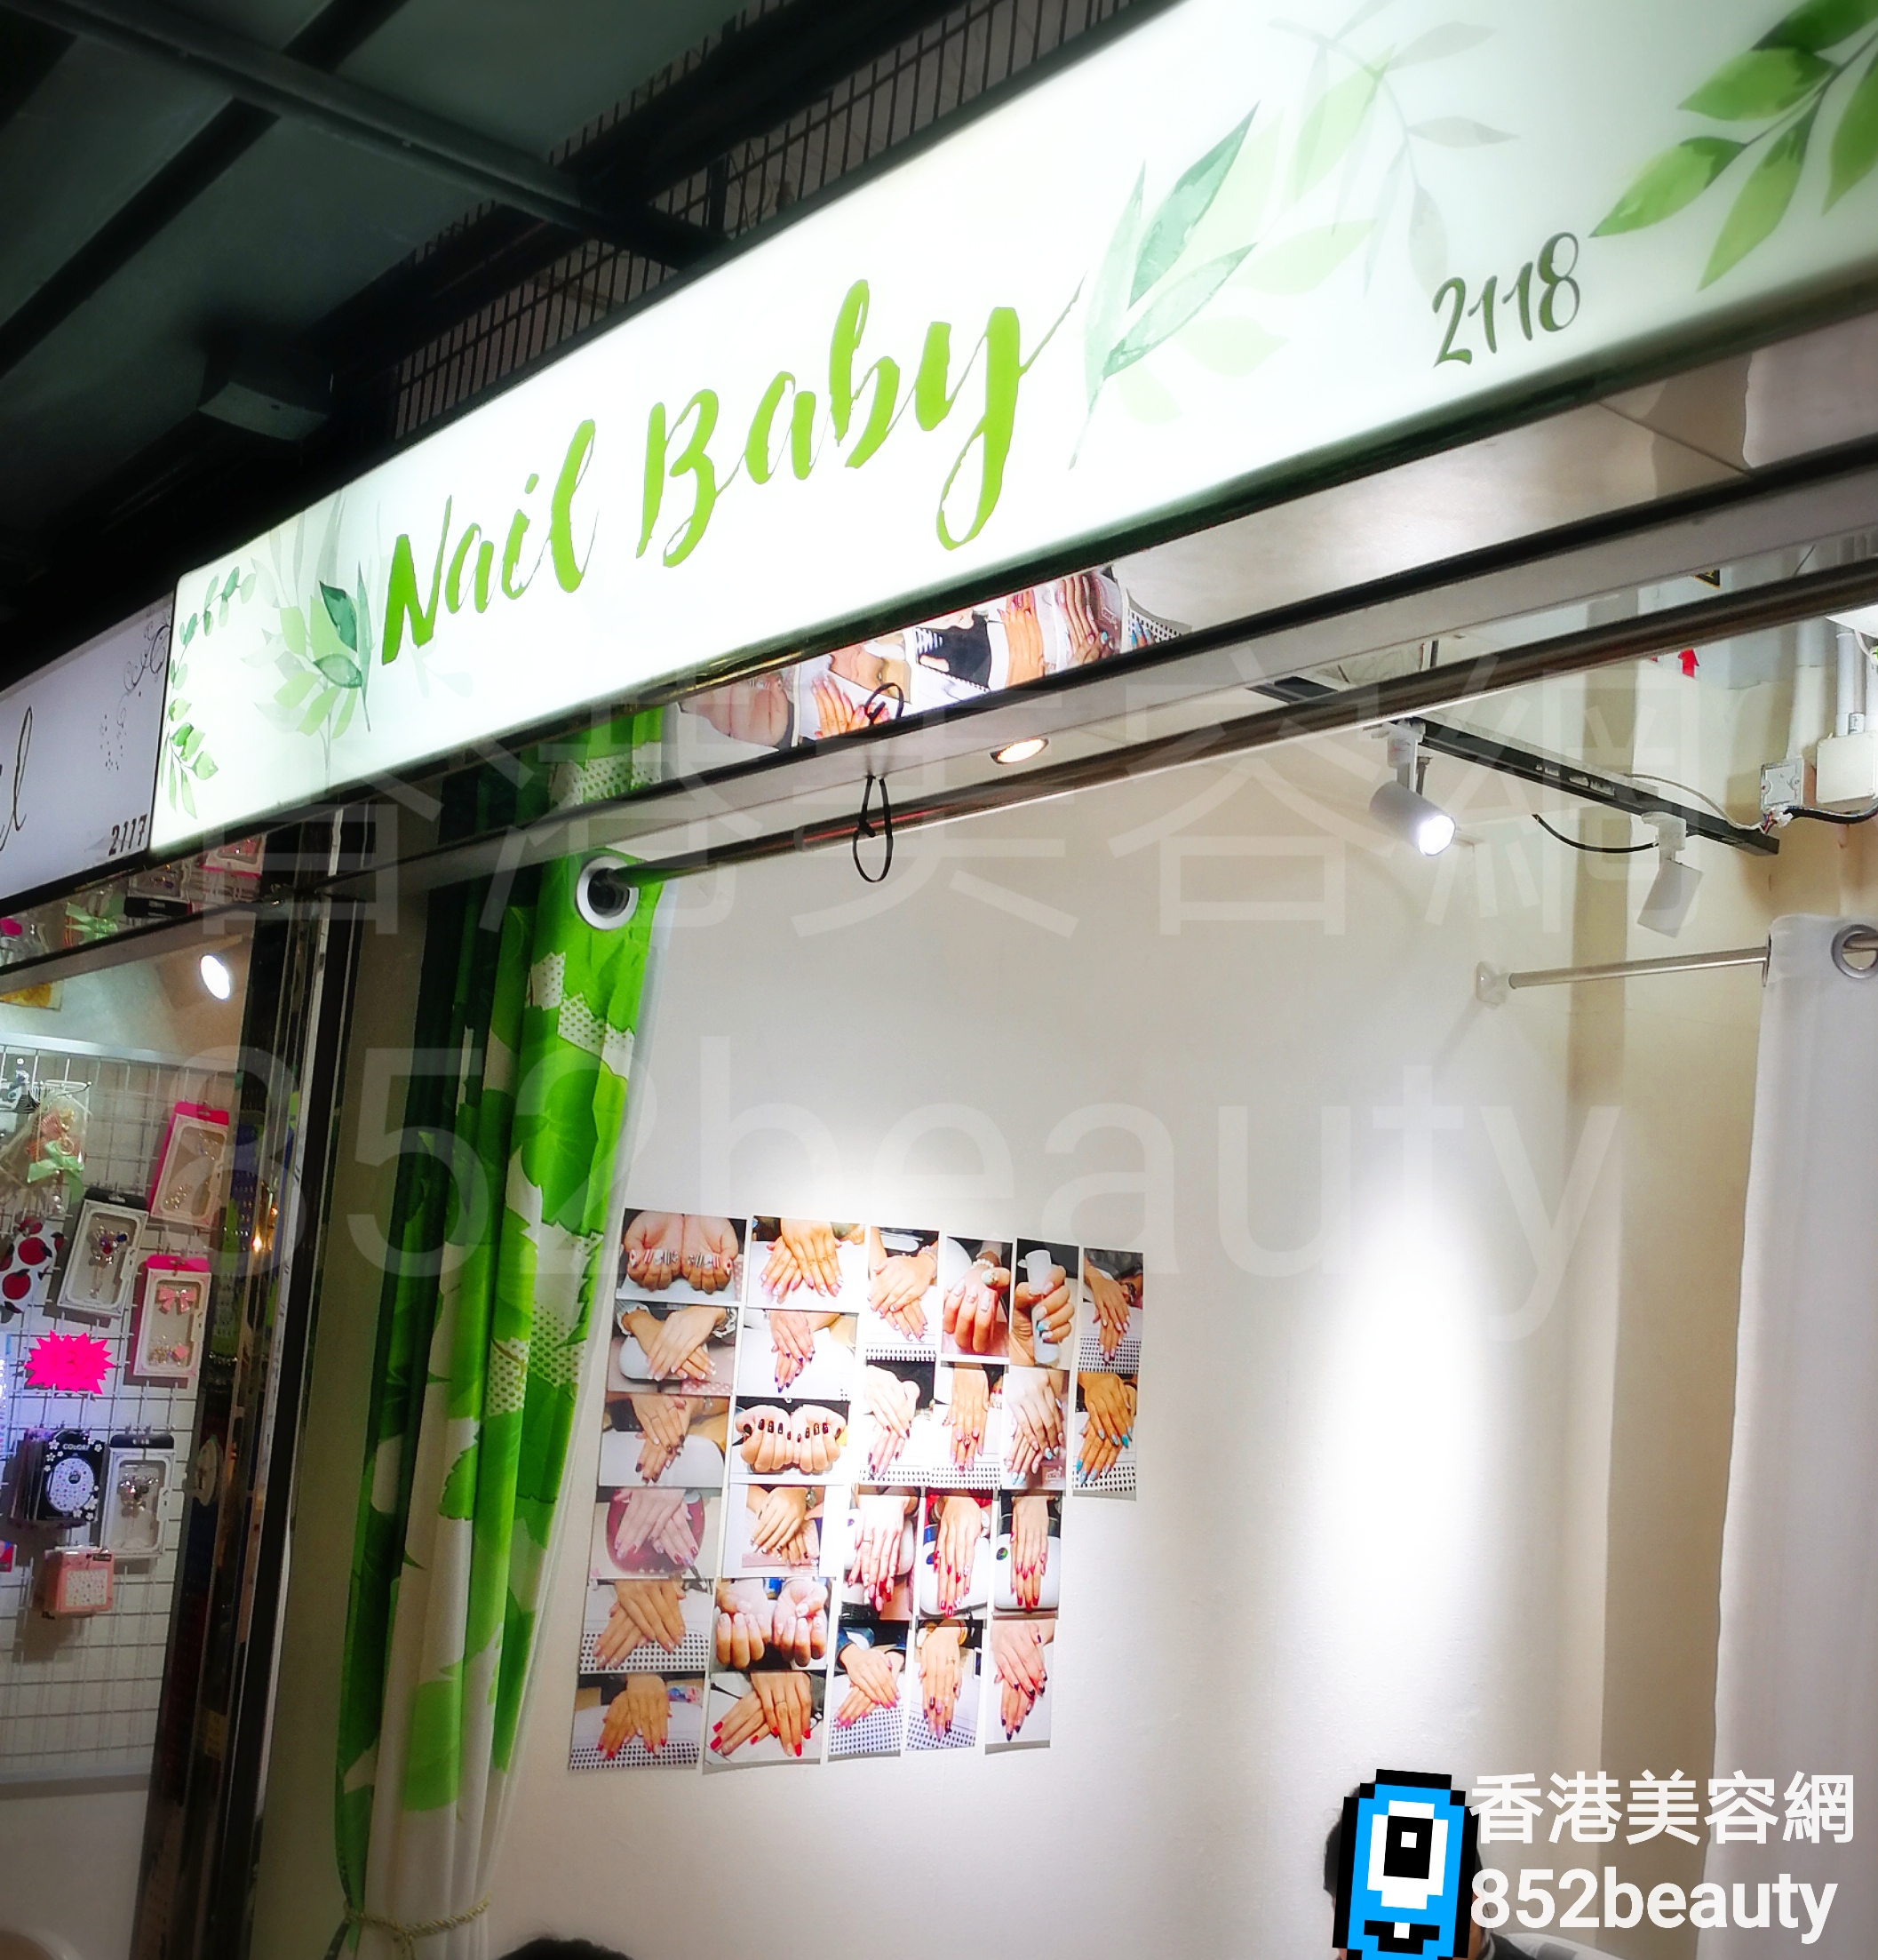 香港美容網 Hong Kong Beauty Salon 美容院 / 美容師: Nail Baby